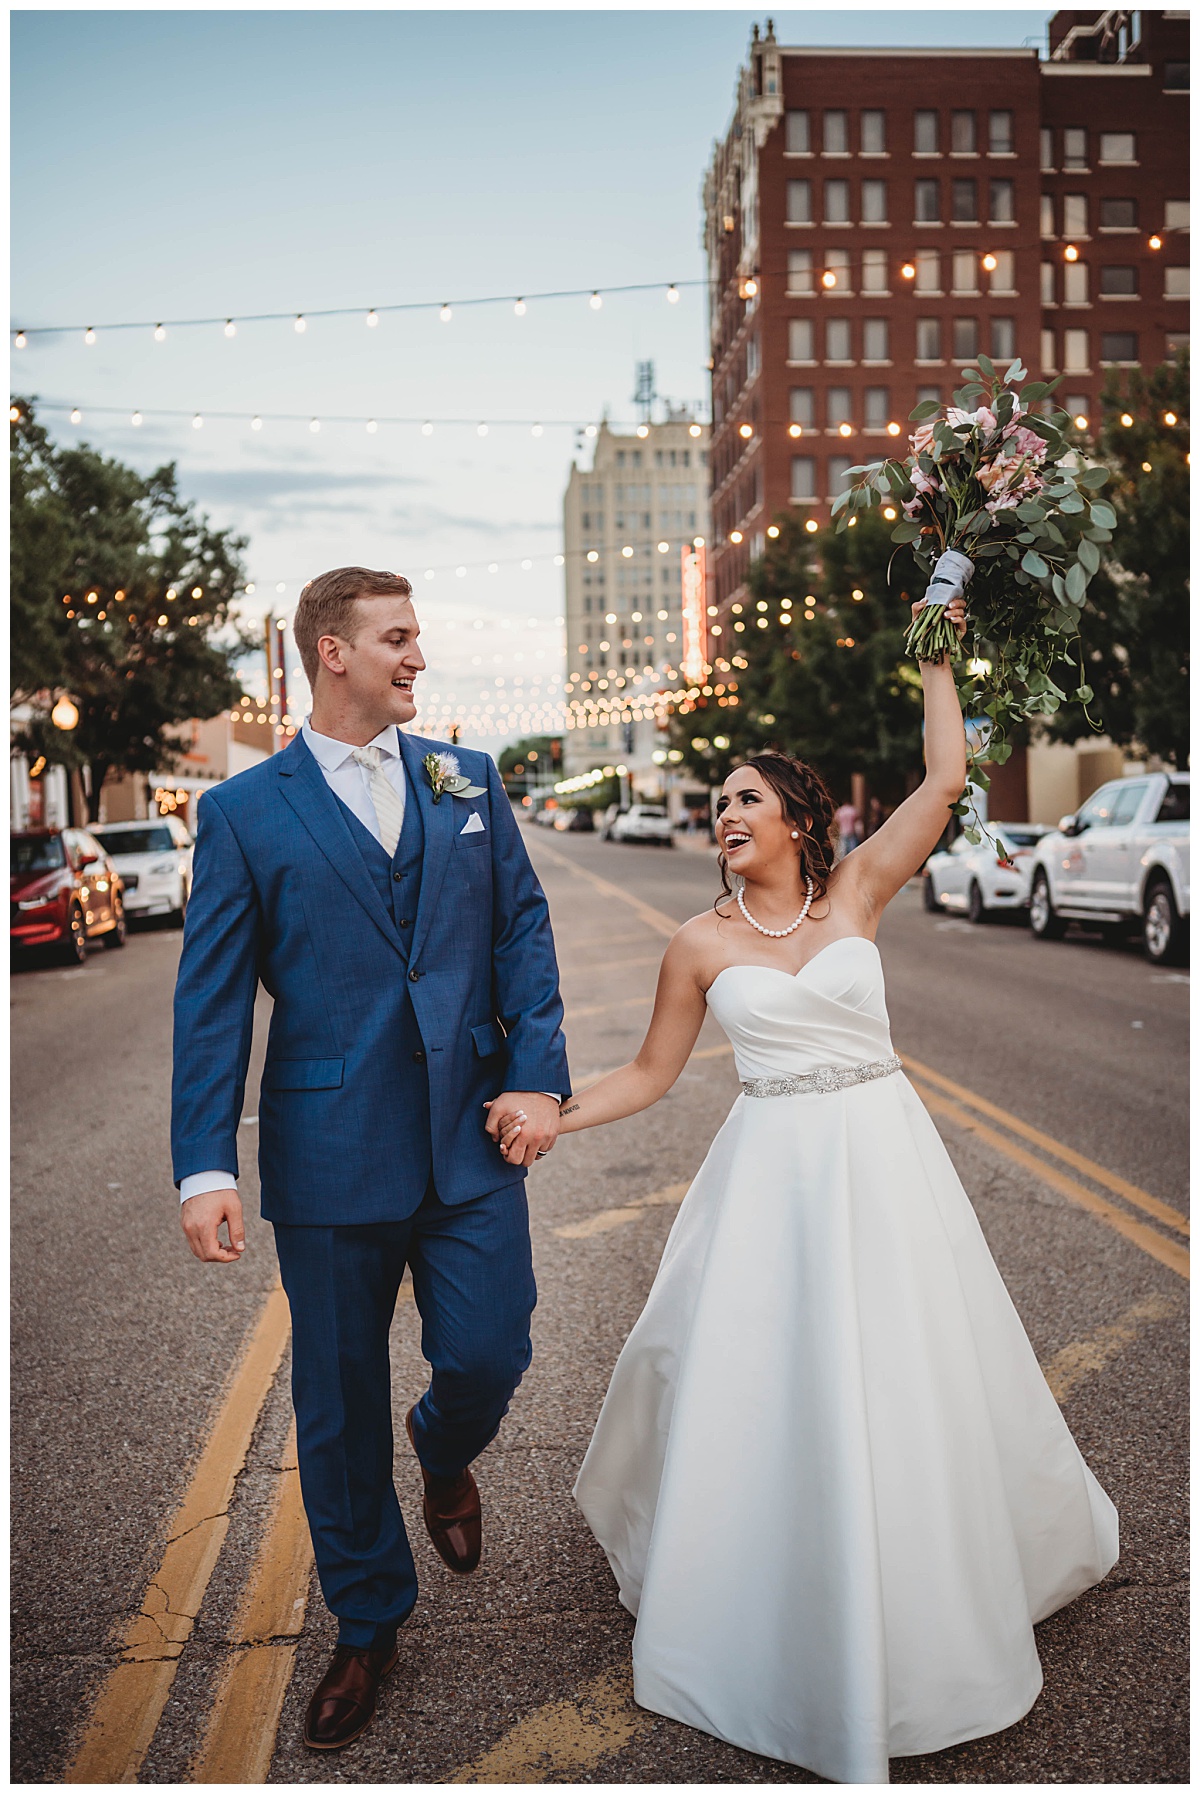 Newlyweds celebrate in street at upscale Texas wedding